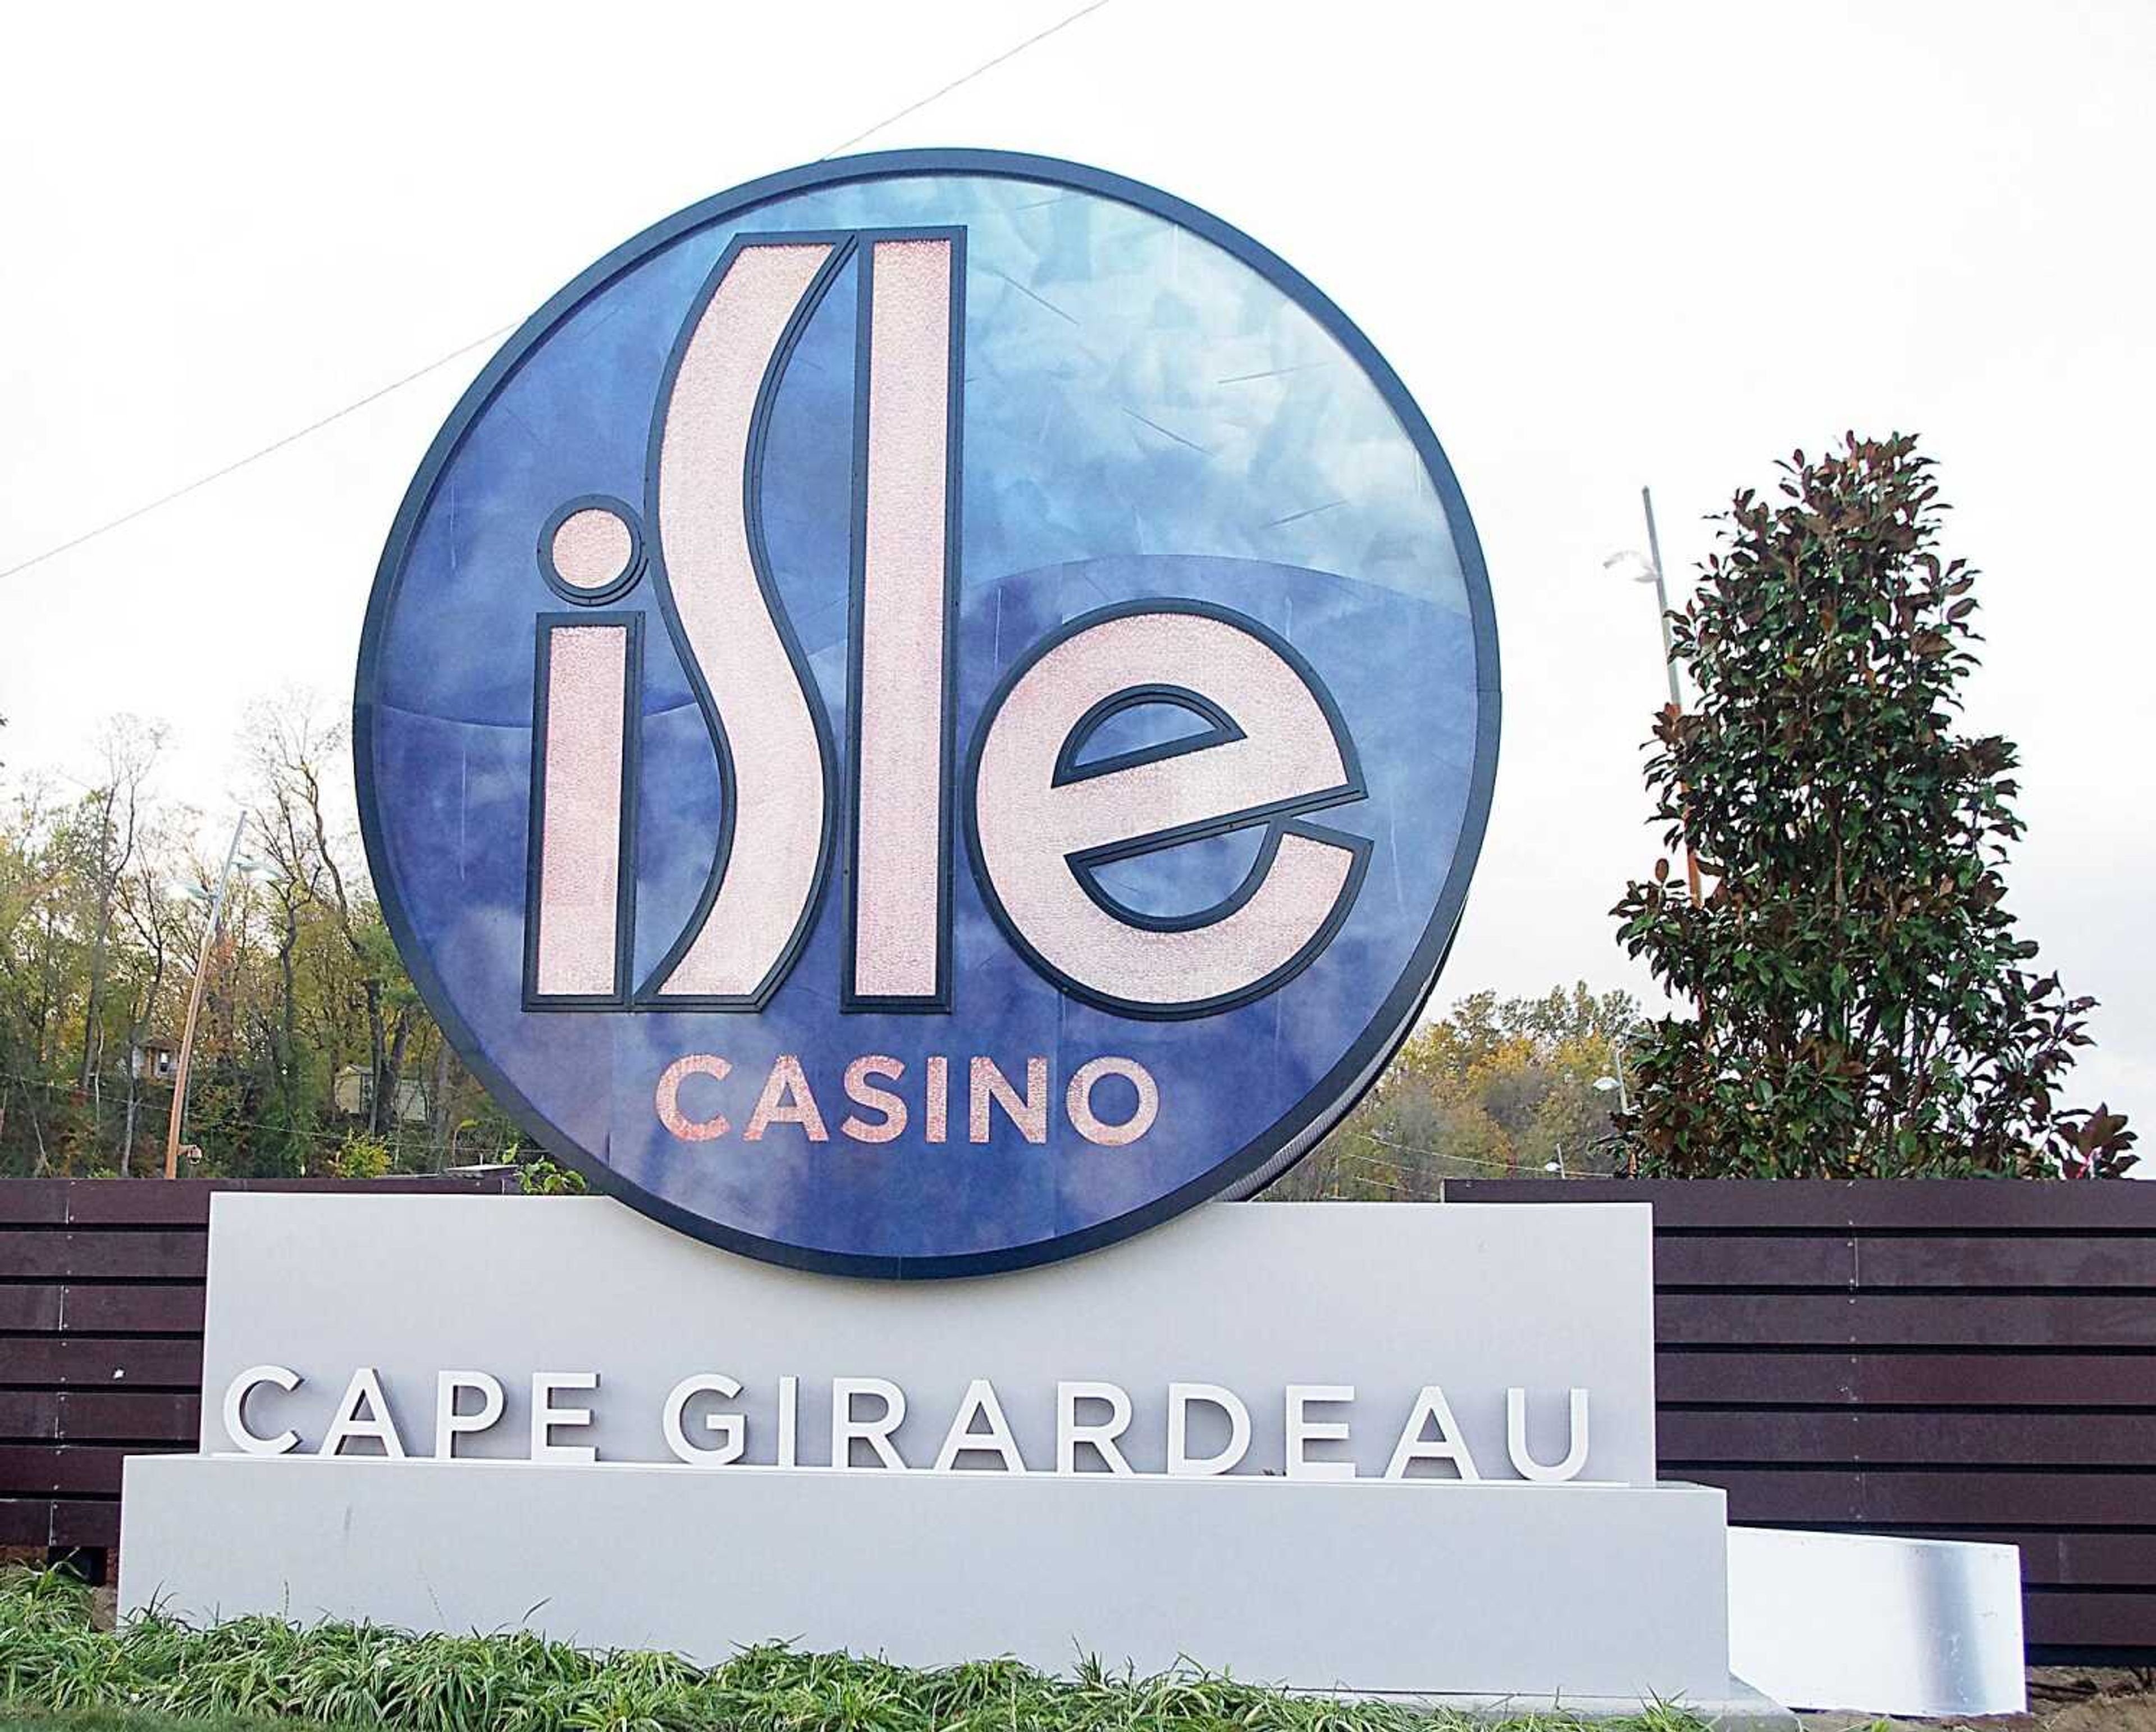 Casino creates jobs within community